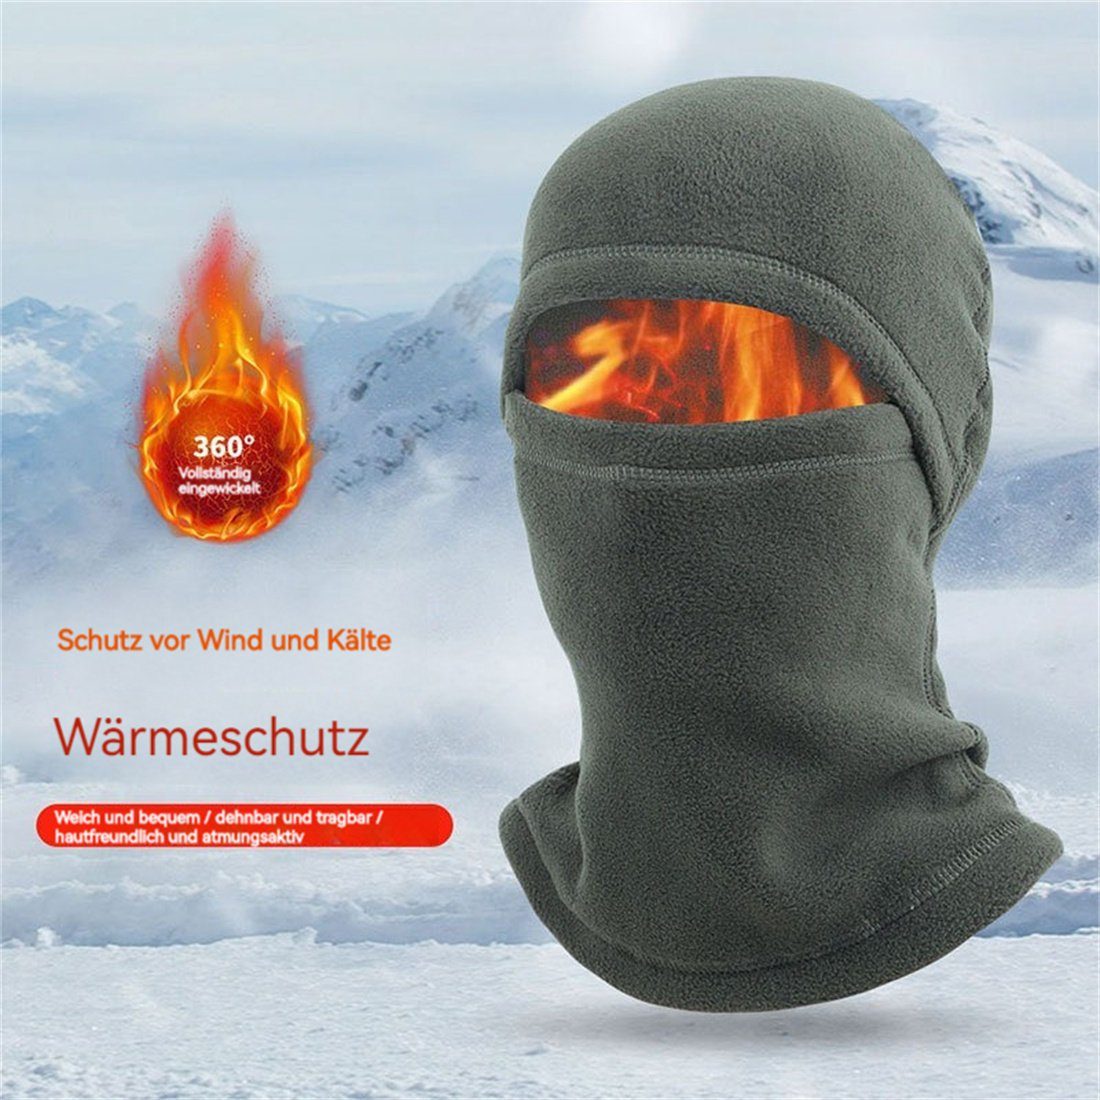 Sturmhaube Kopfbedeckung Winter Reiten Maske,Multifunktionale DÖRÖY Warme dunkelgrau Coldproof Ski